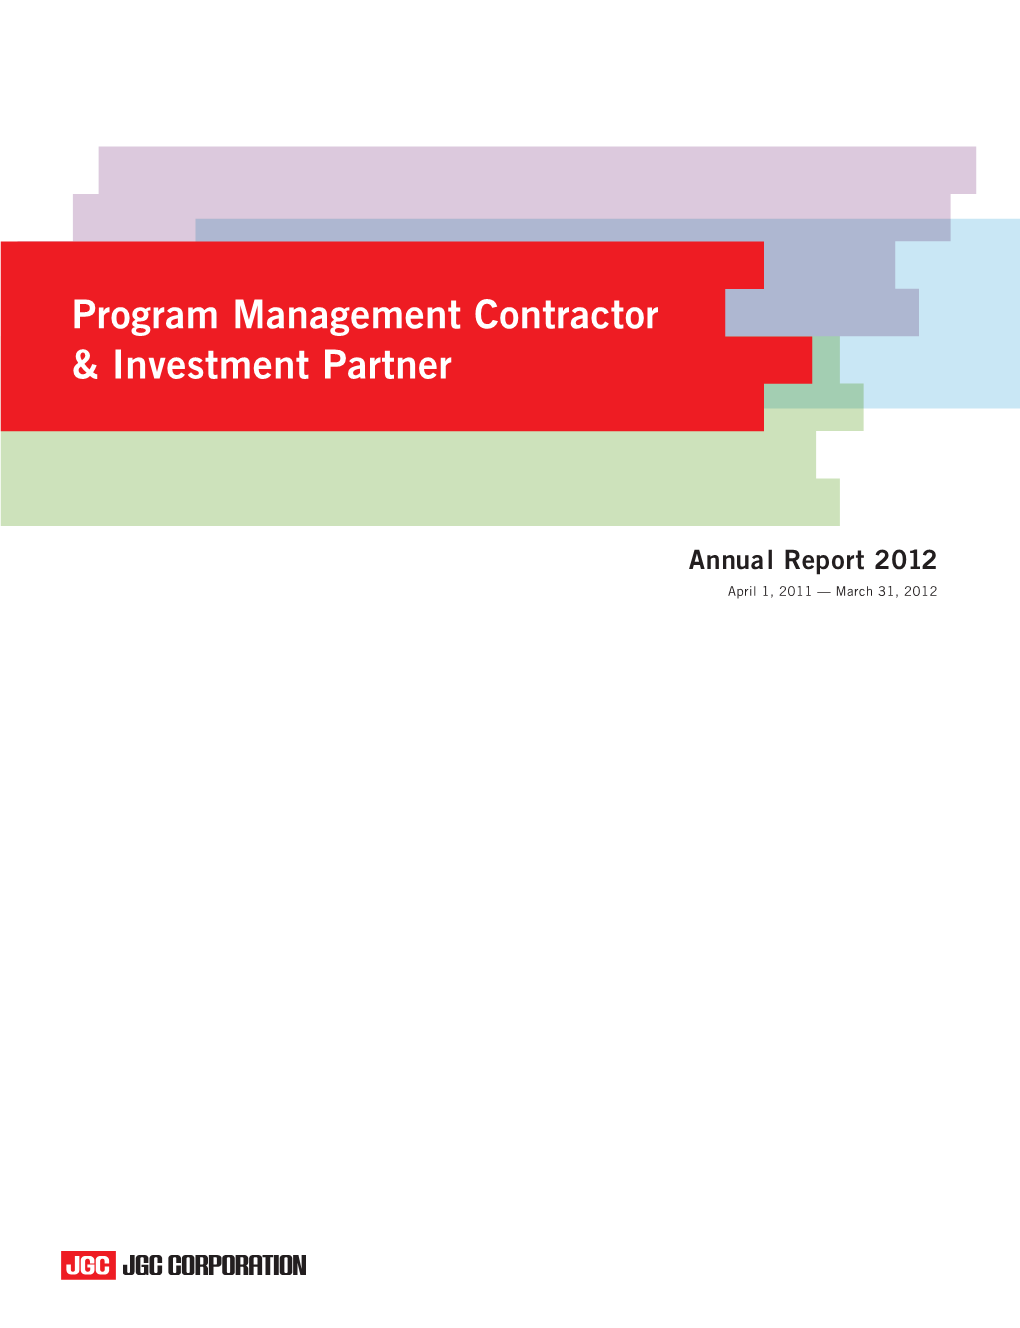 Program Management Contractor & Investment Partner